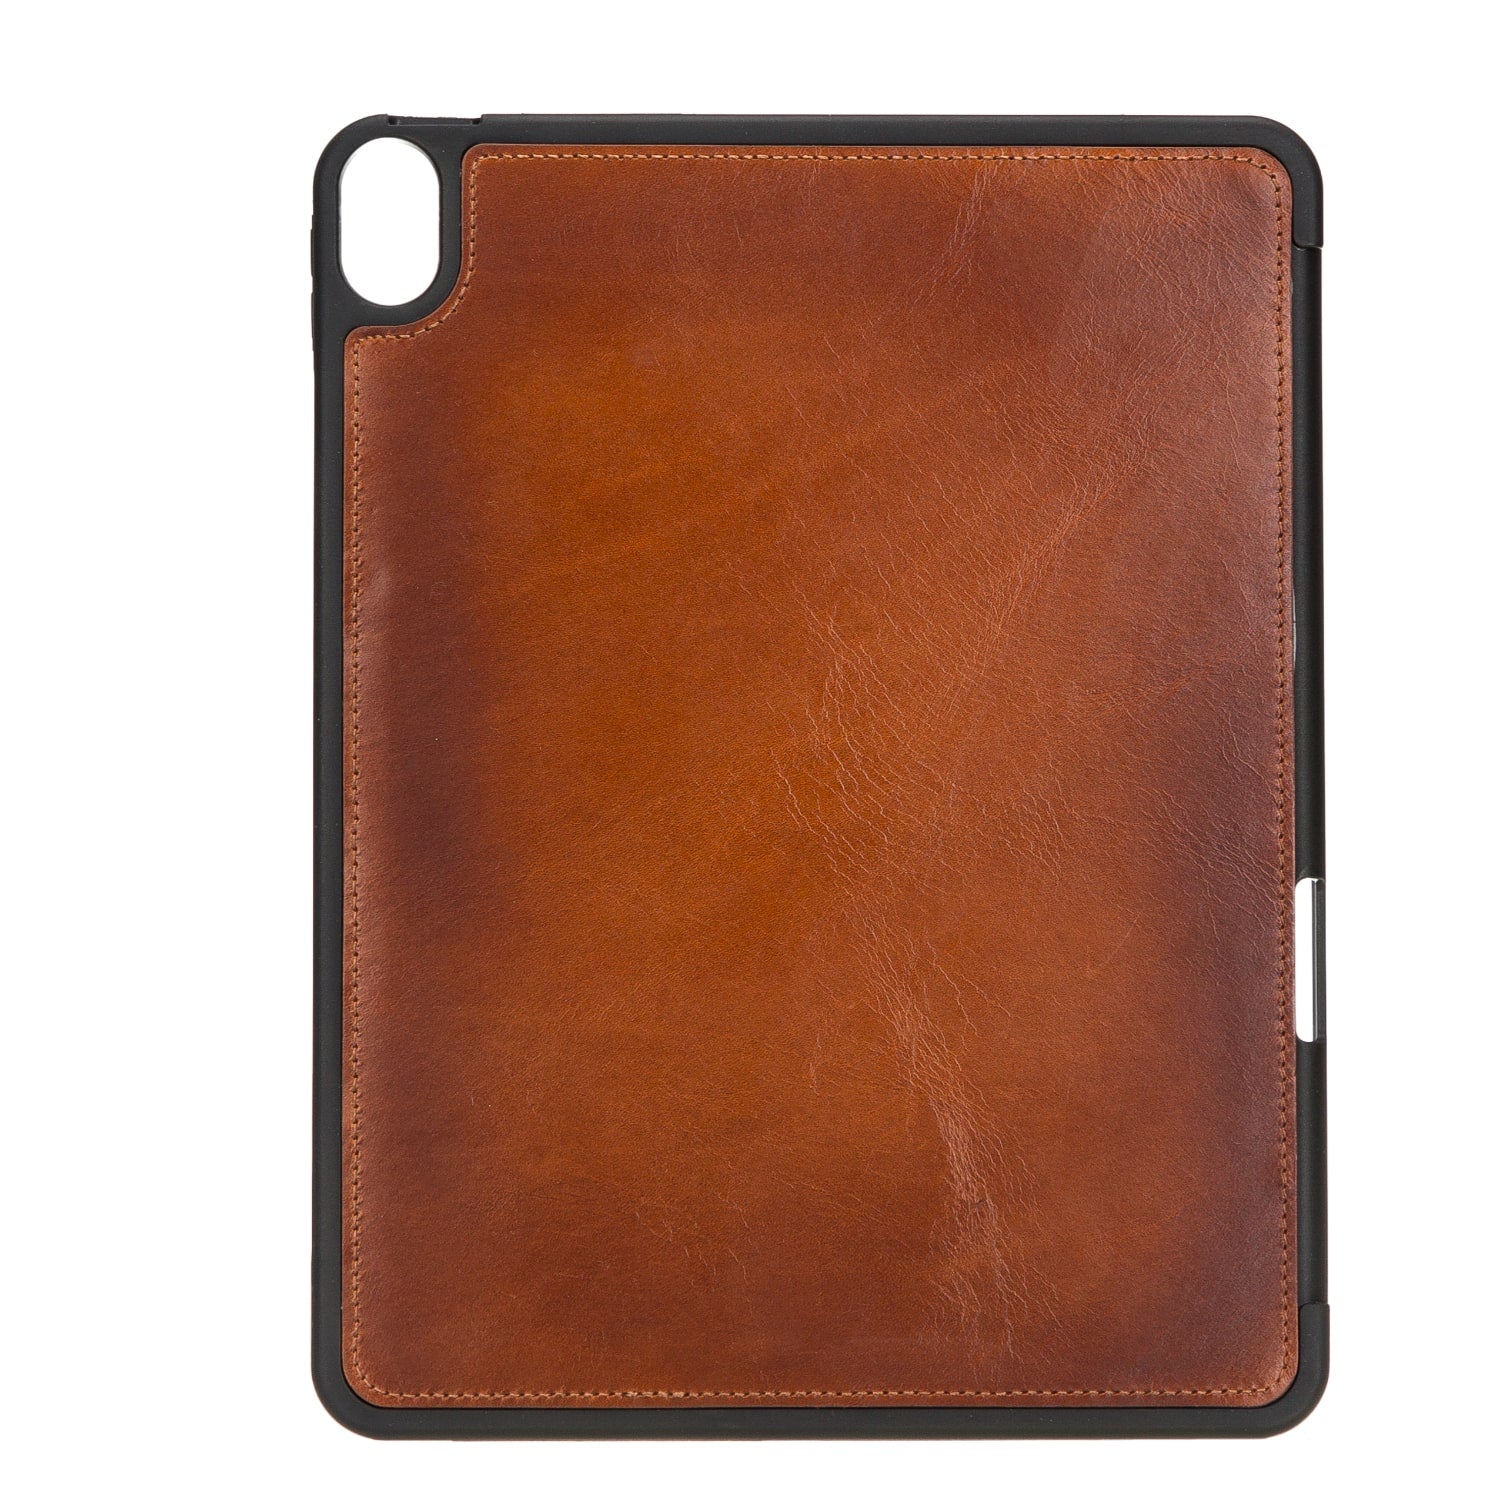 Brown Leather iPad Air 10.9 Inc Smart Folio Case with Apple Pen Holder - Bomonti - 5